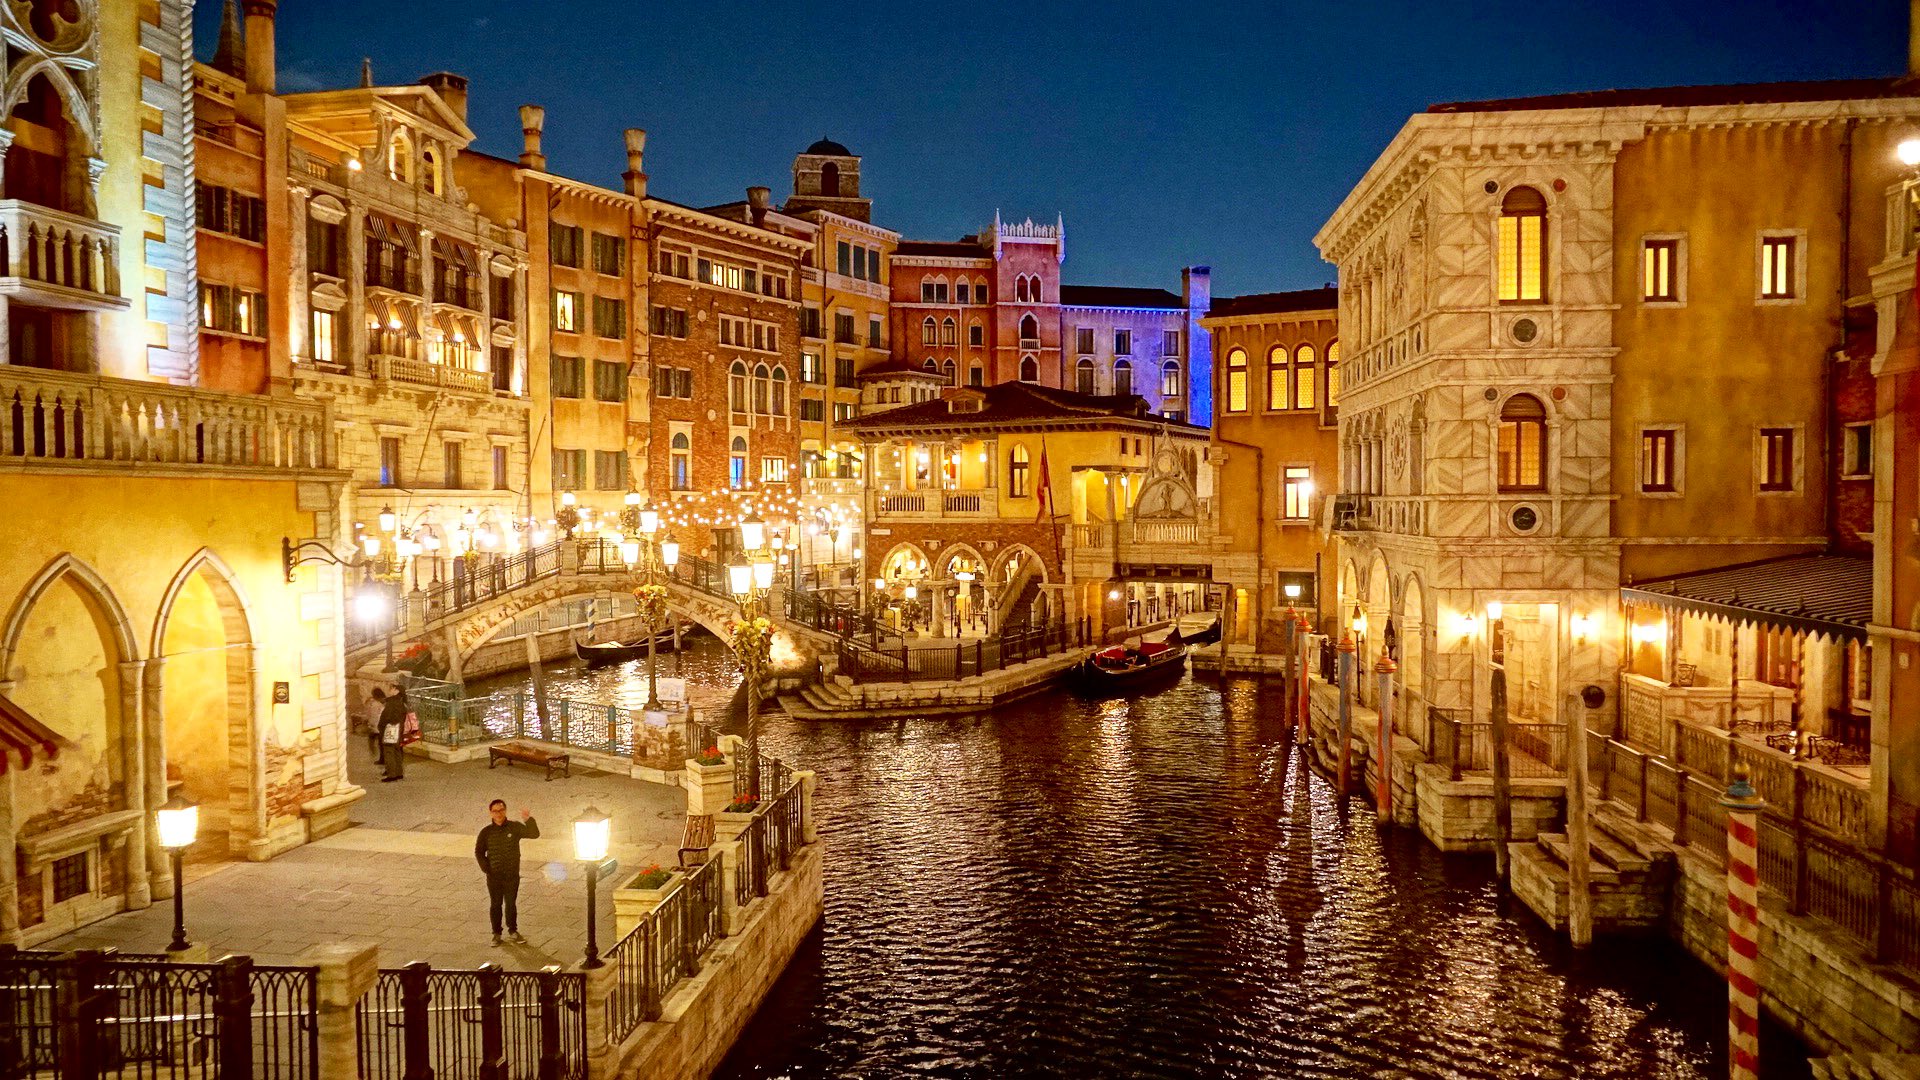 Night time shot of Venetian canals at DisneySea